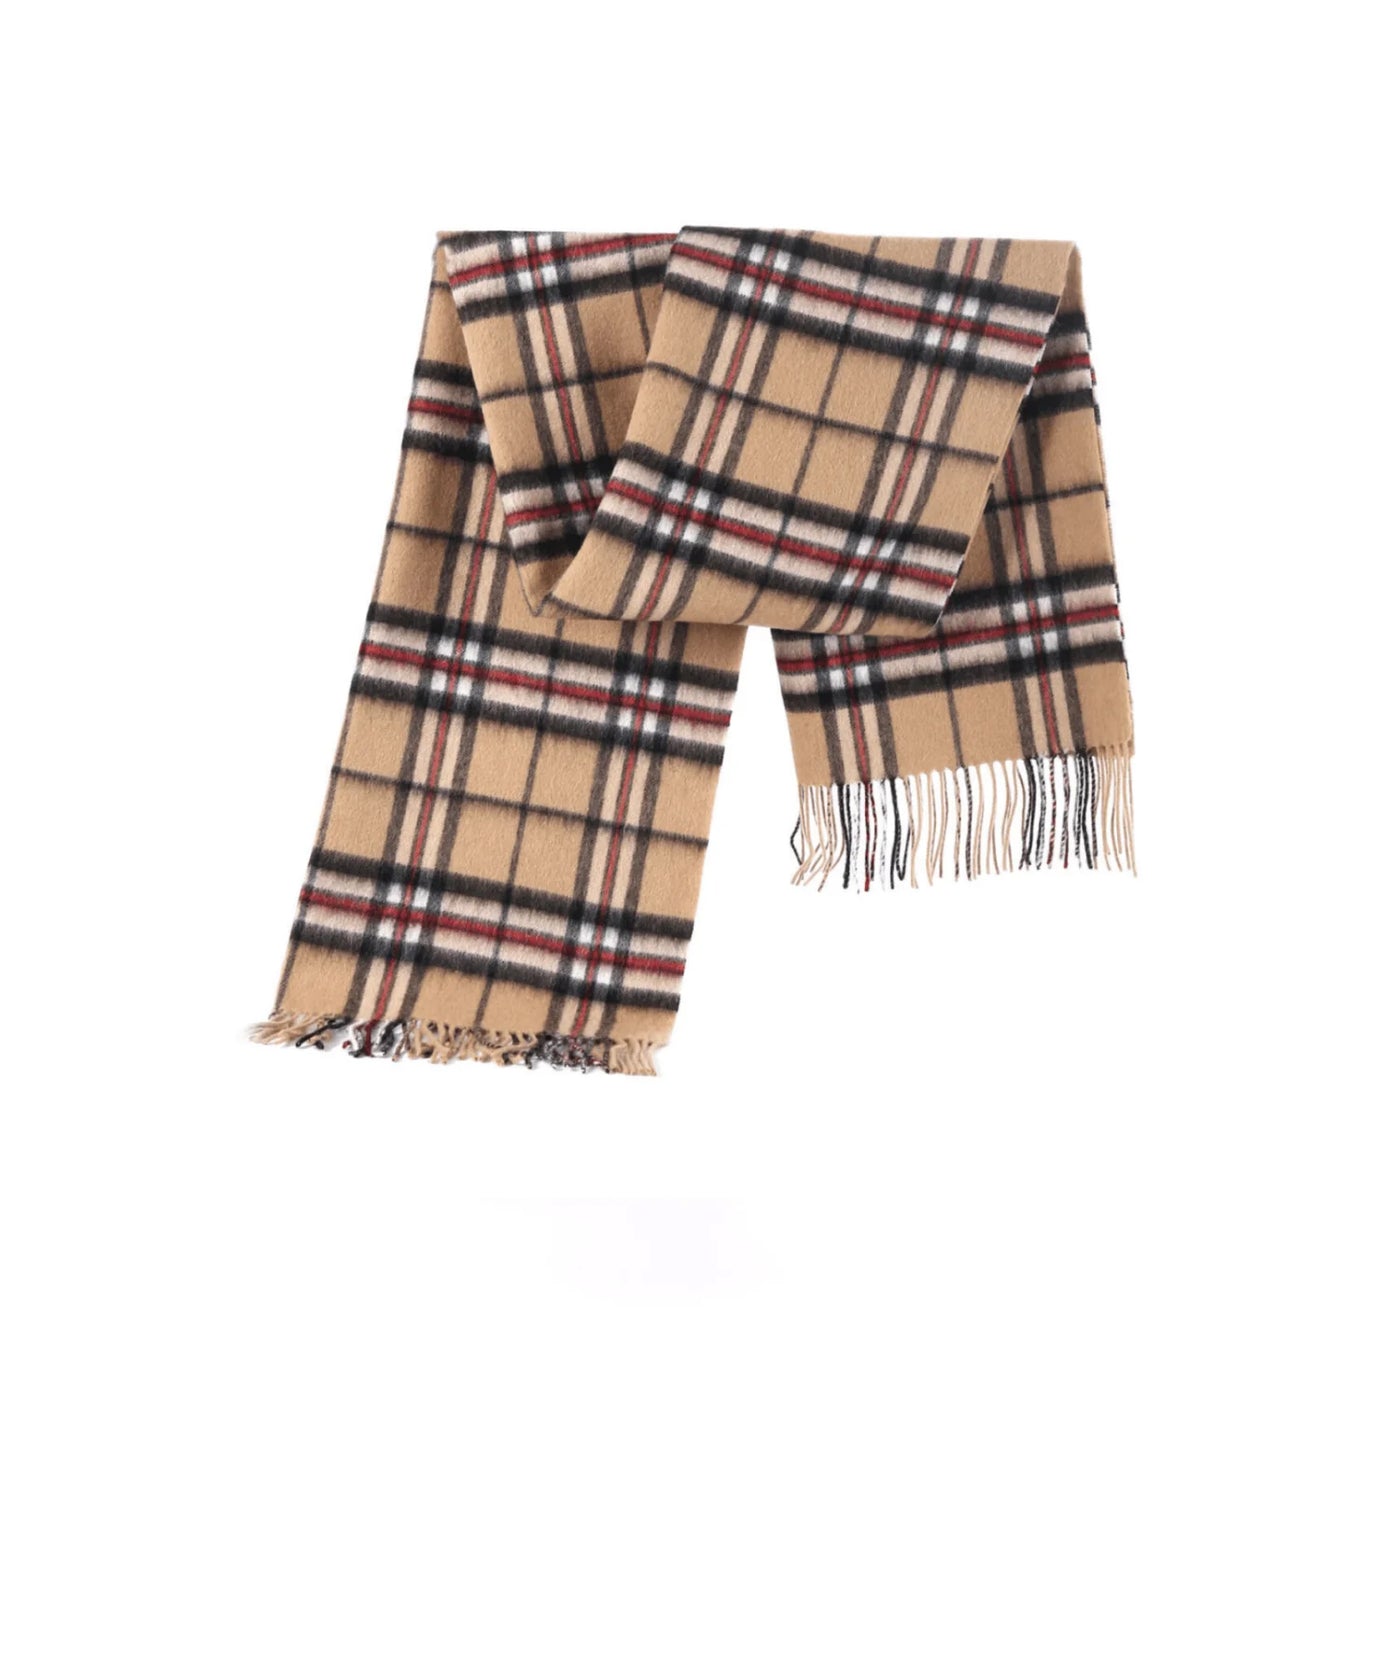 Blanket 100% Pure wool Throw Scottish Design